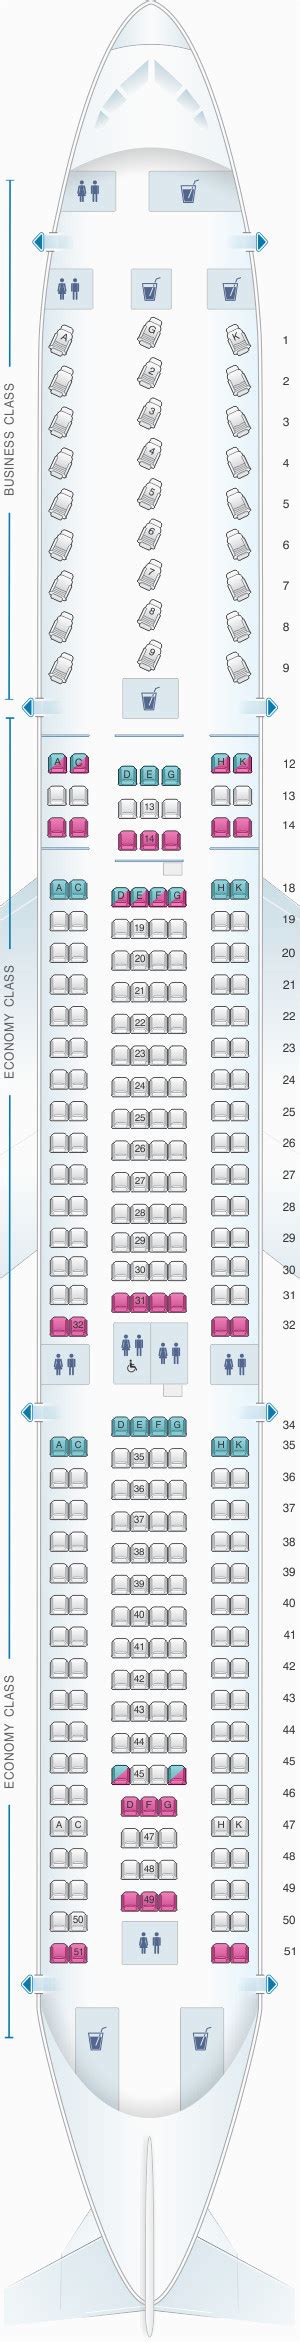 Air Canada 333 Seat Map Air Canada Seating Chart Elegant Seatguru Seat